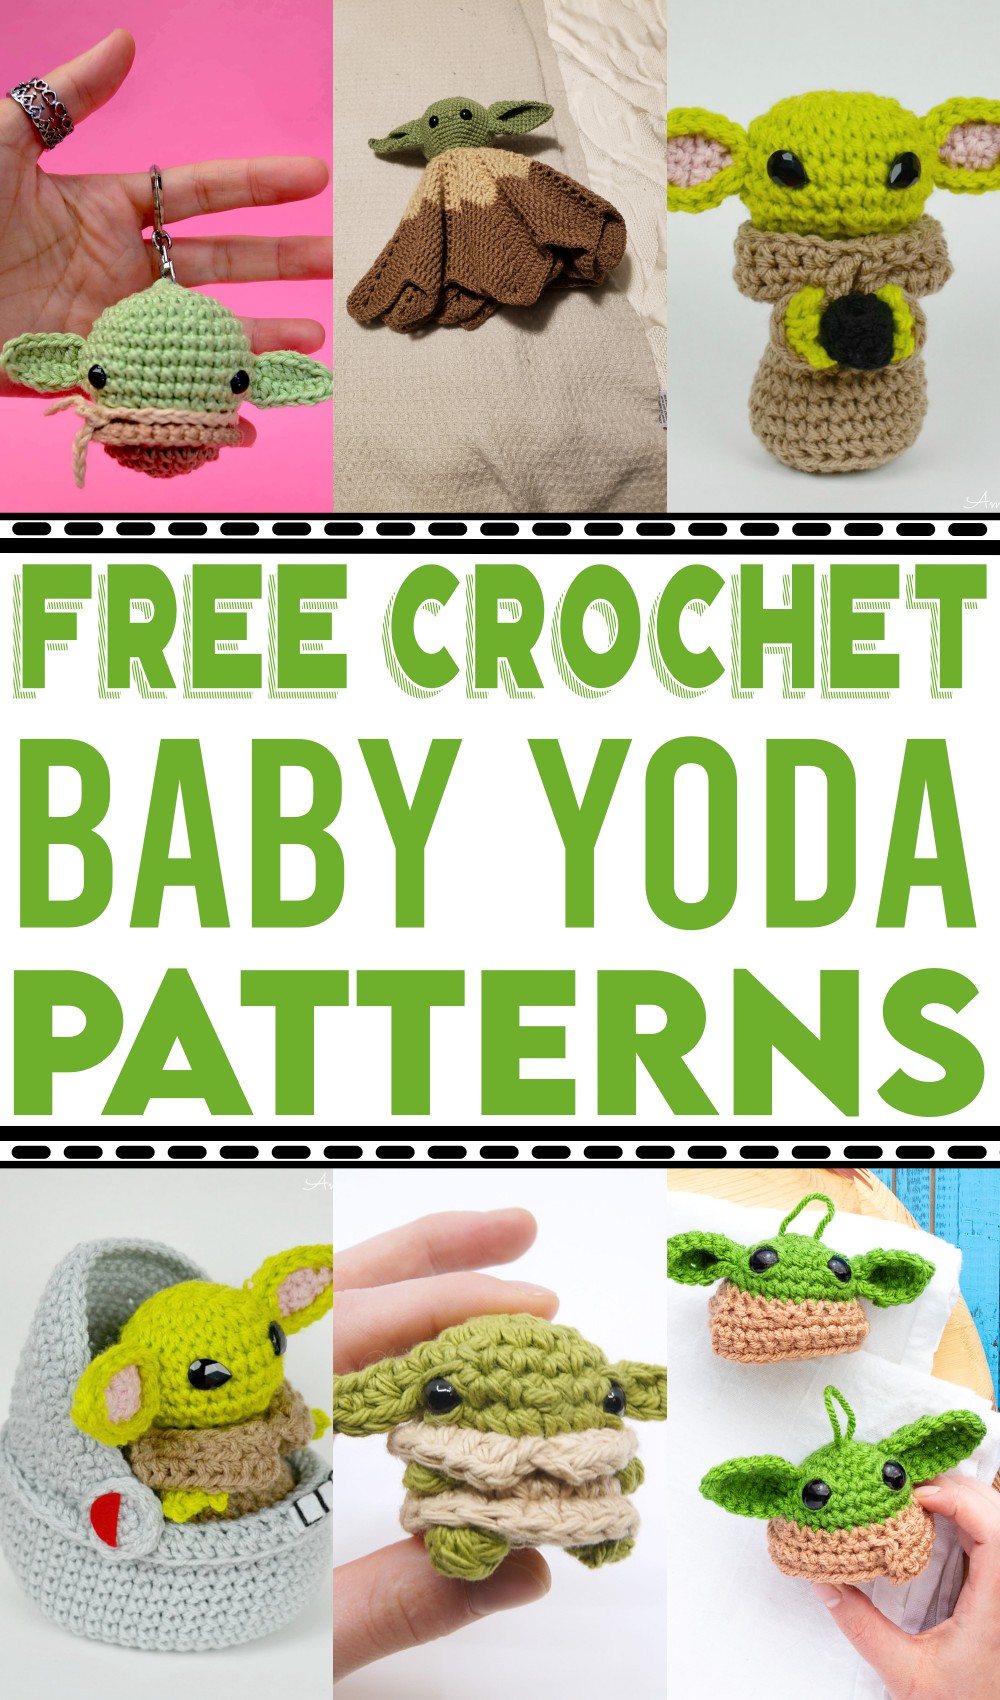 Free Crochet Baby Yoda Patterns